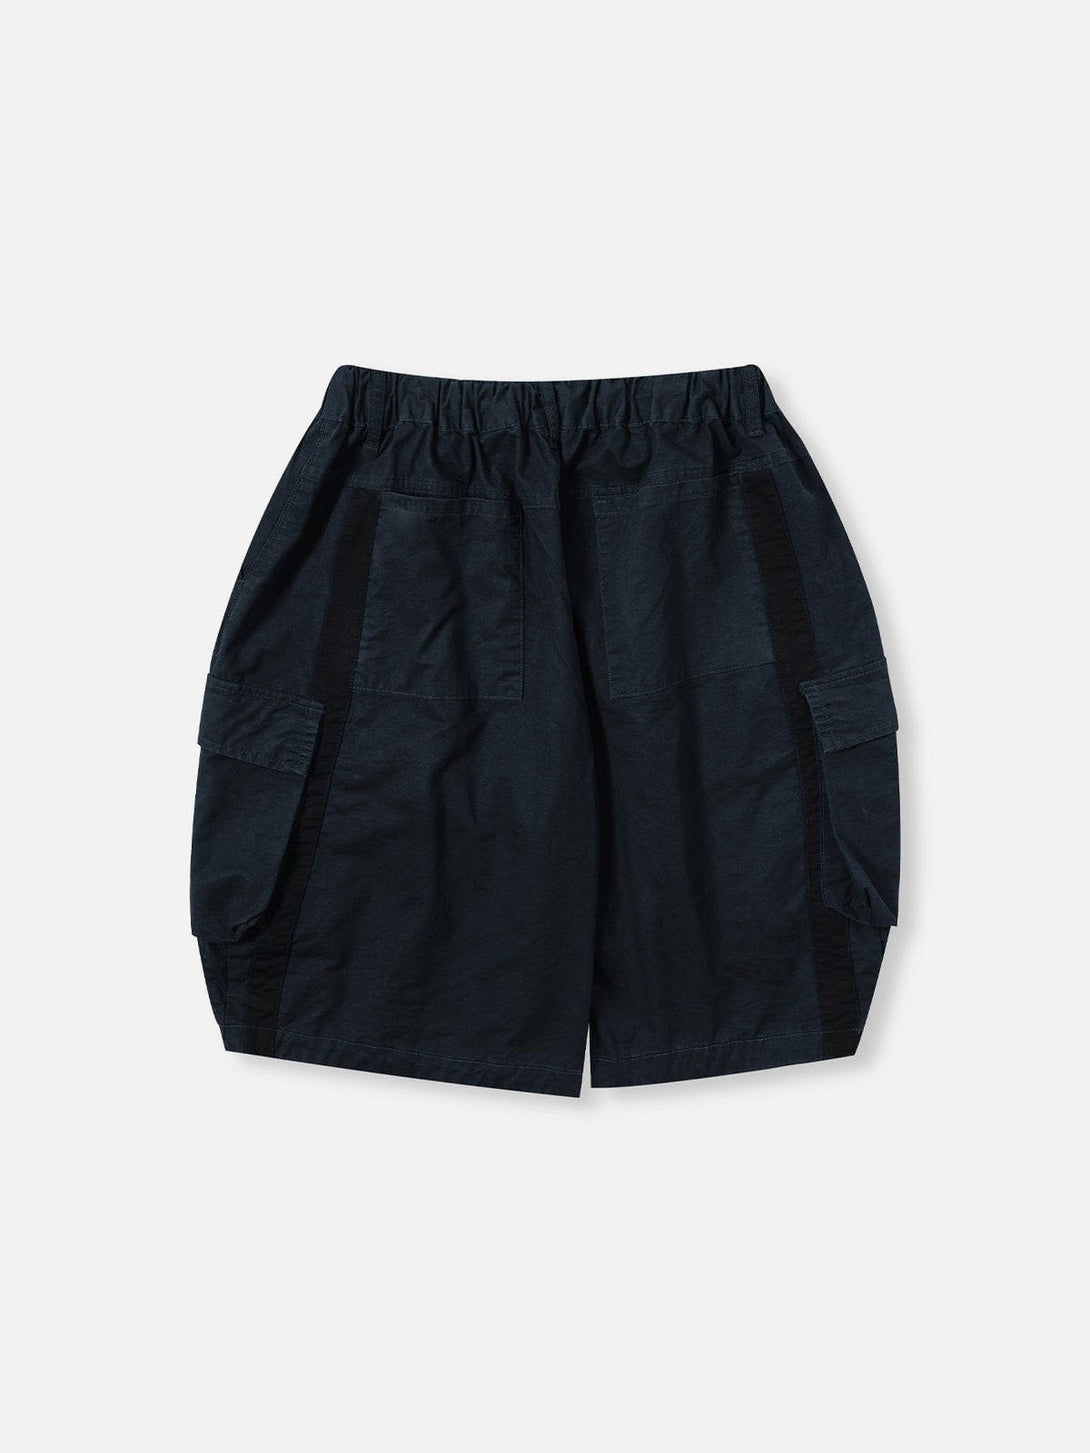 Levefly - Large Pocket Patchwork Shorts - Streetwear Fashion - levefly.com